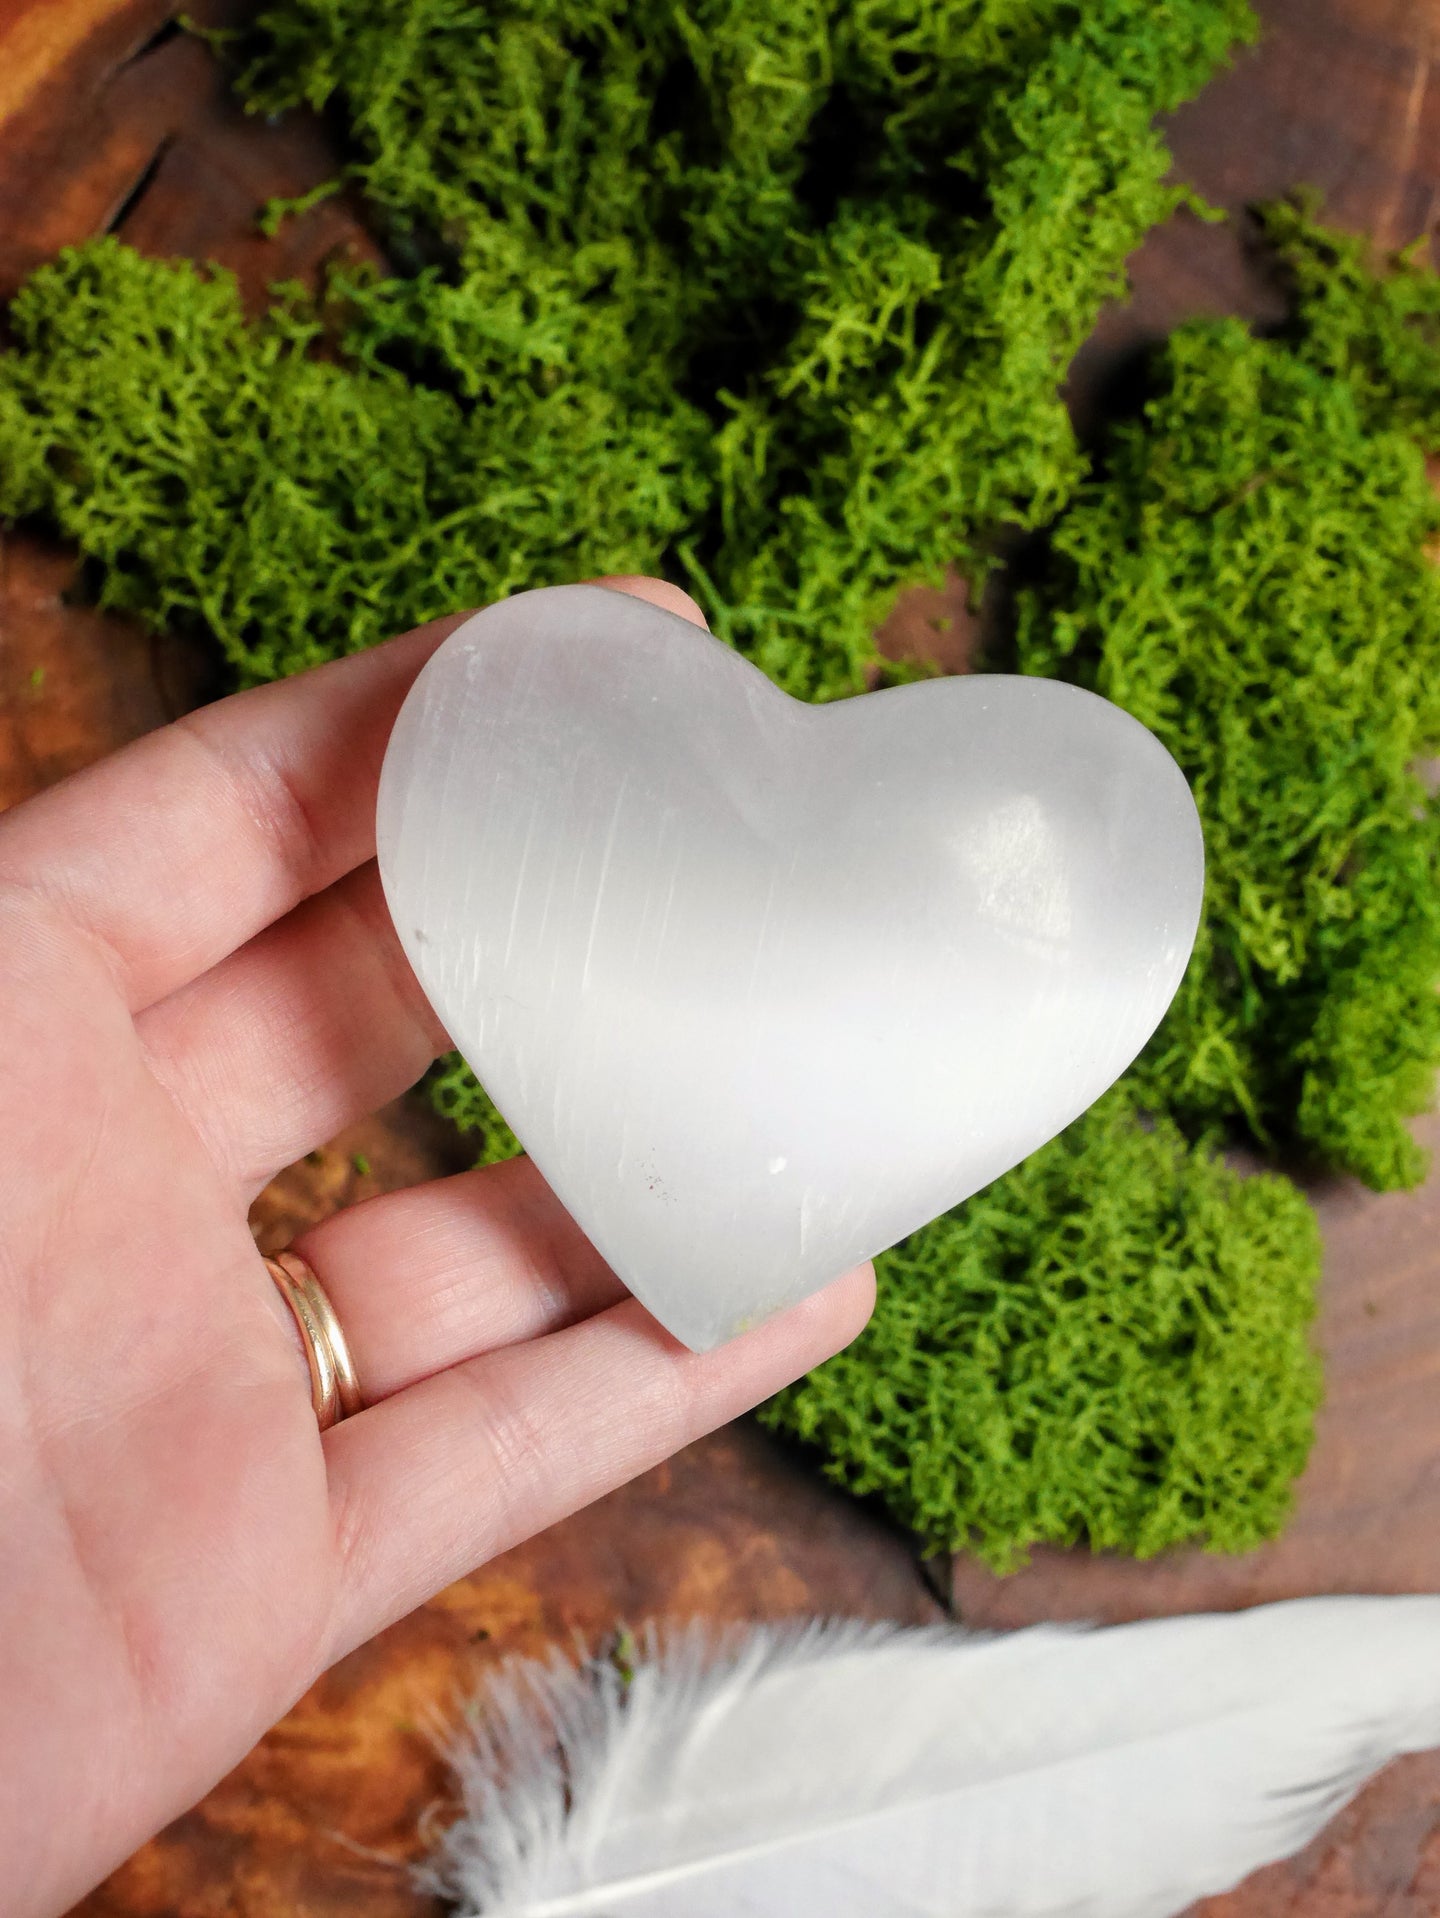 Selenite Heart Carving